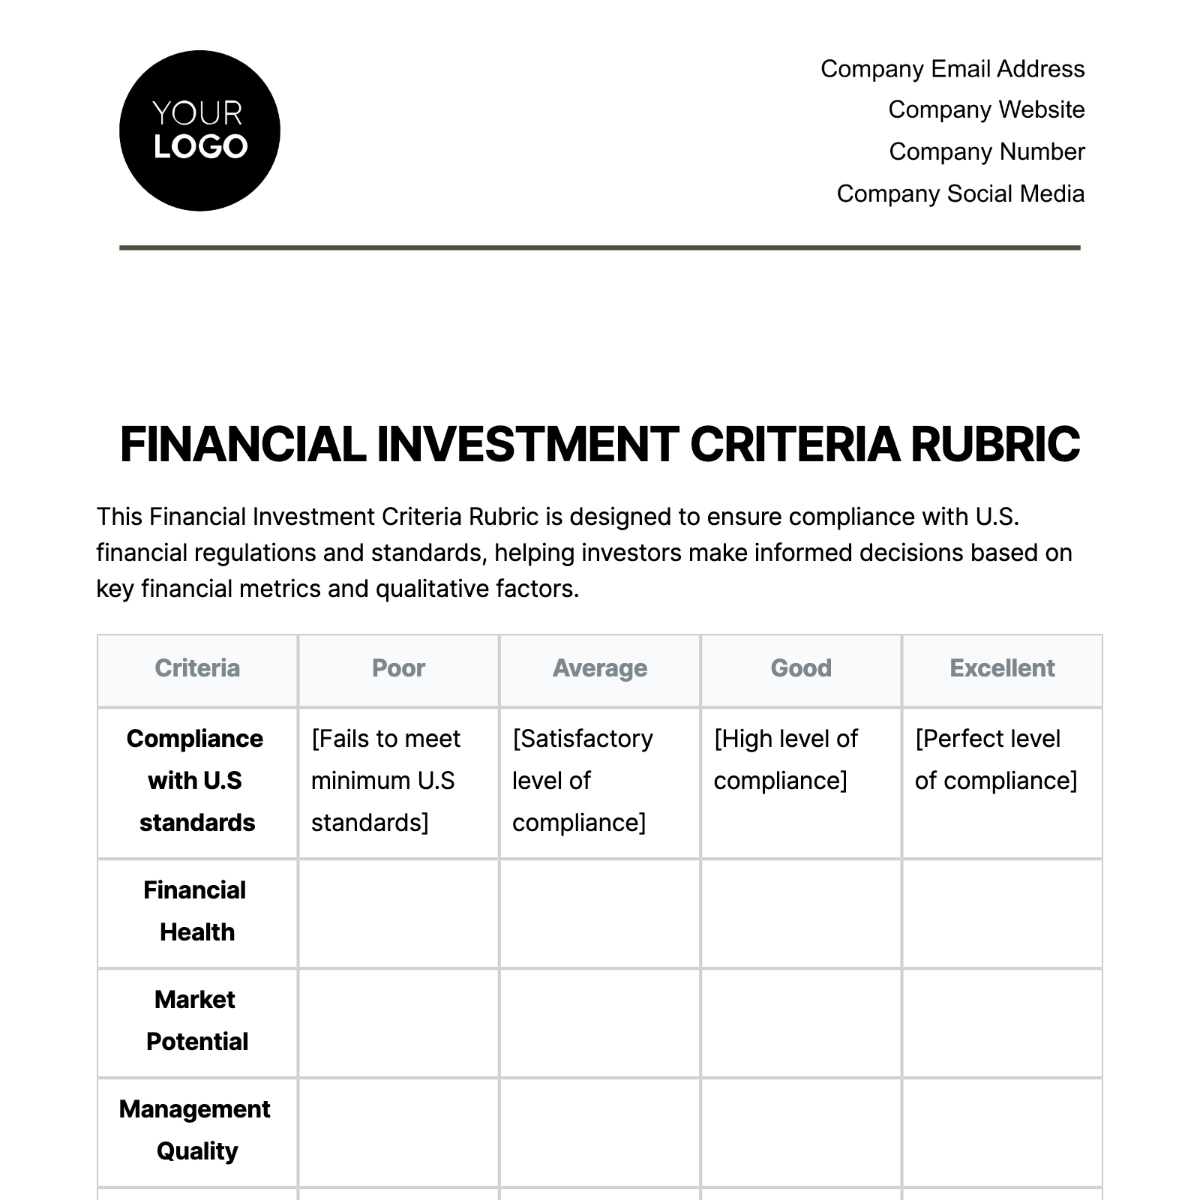 Financial Investment Criteria Rubric Template